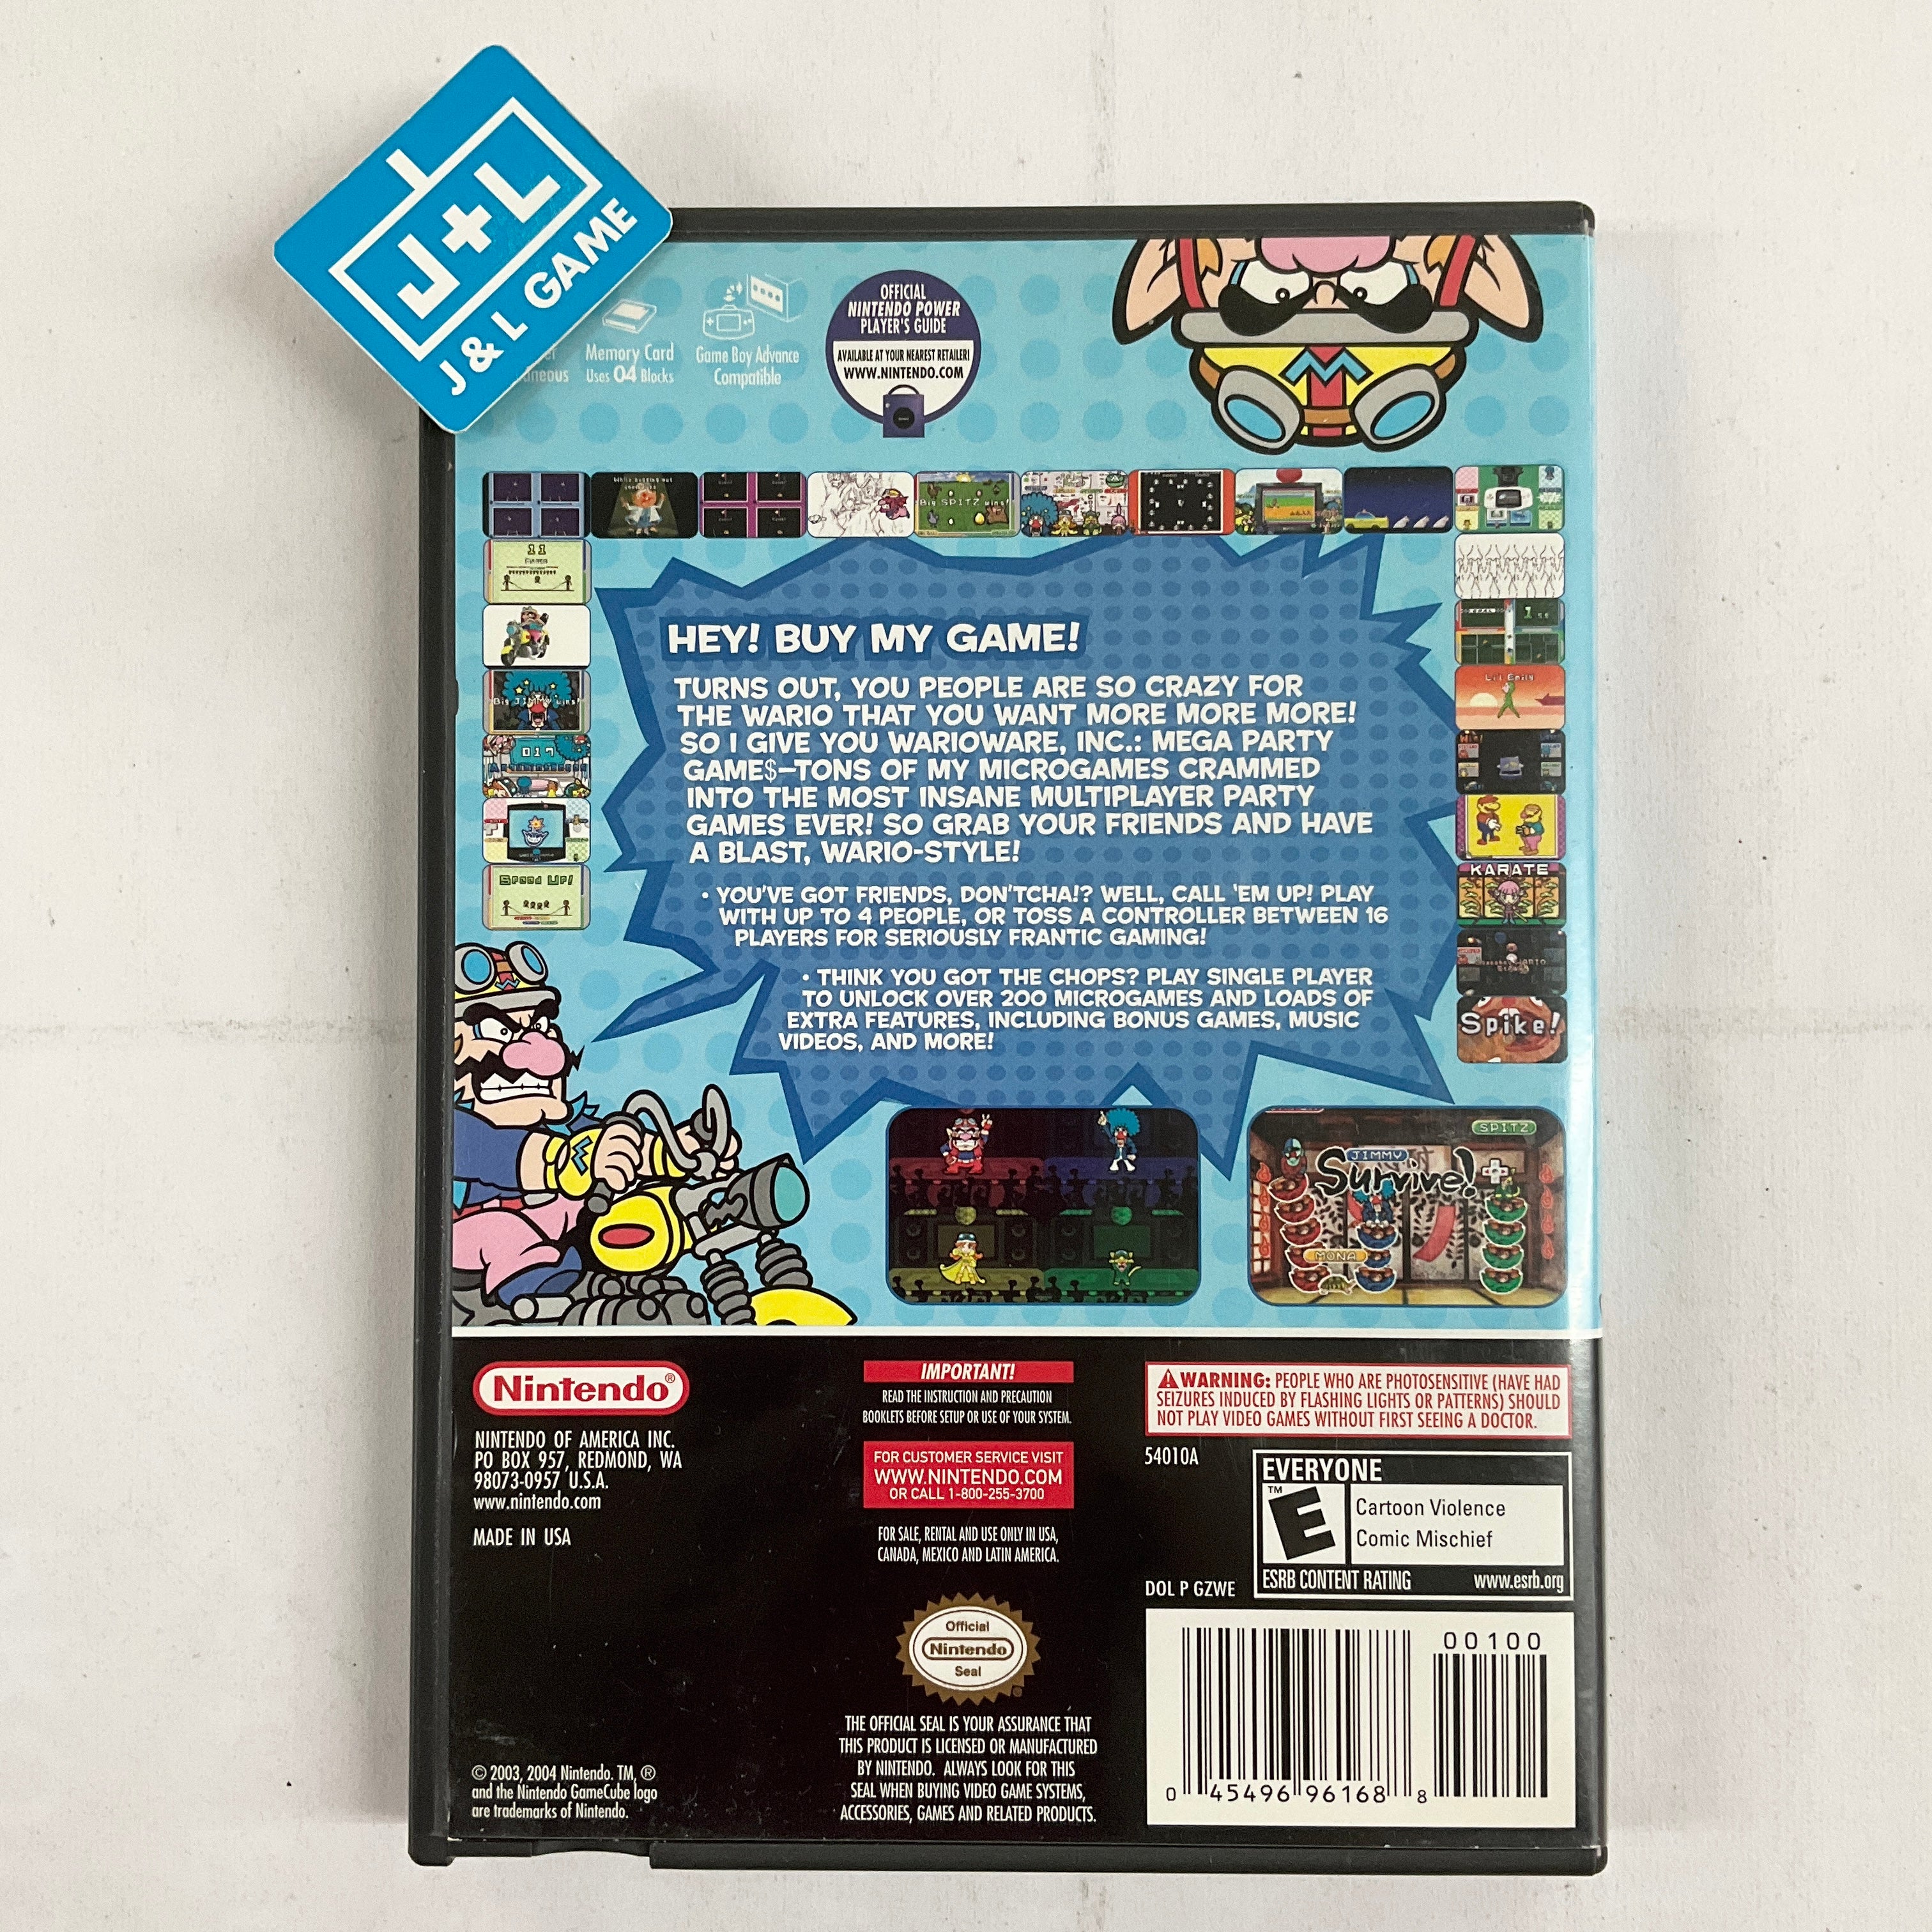 WarioWare, Inc.: Mega Party Game - (GC) GameCube [Pre-Owned] Video Games Nintendo   